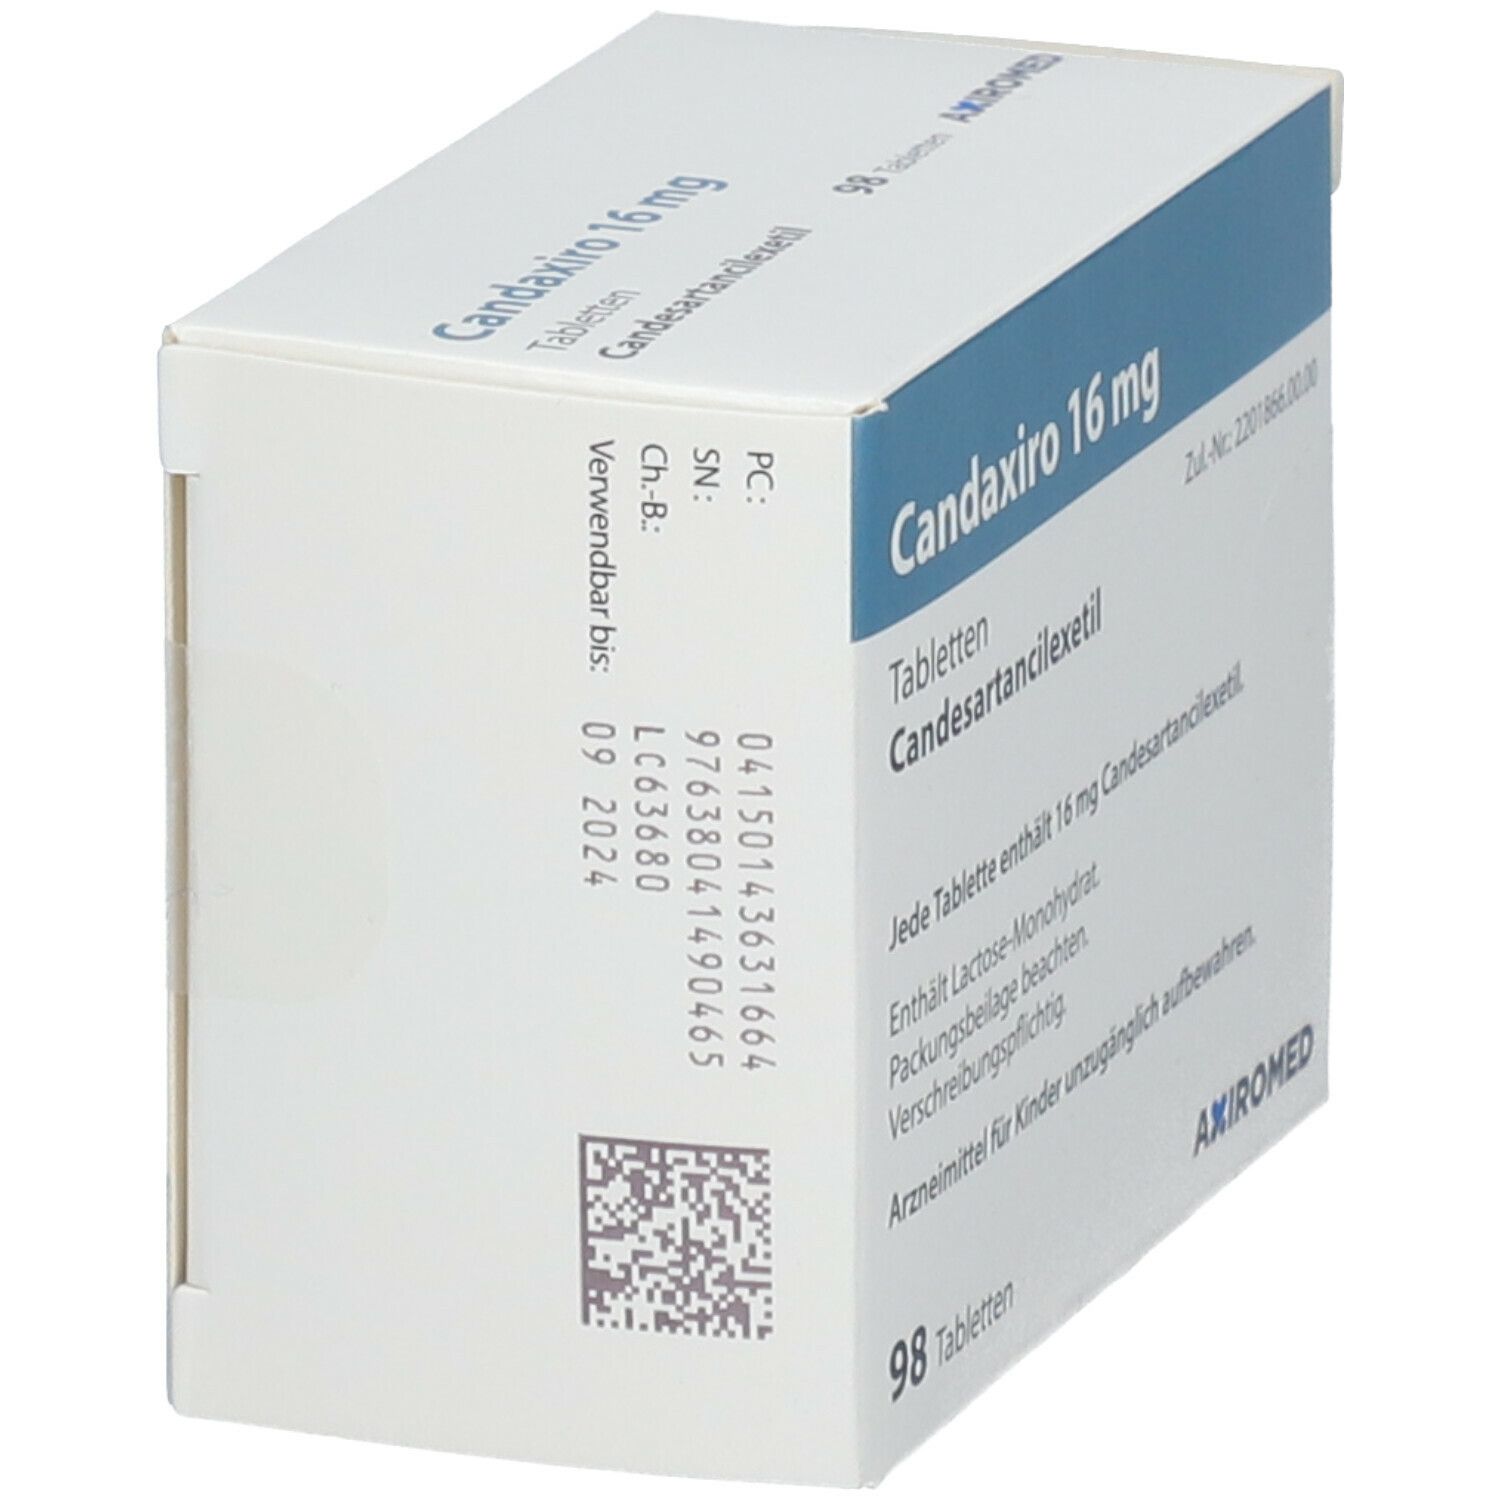 Candaxiro 16 mg